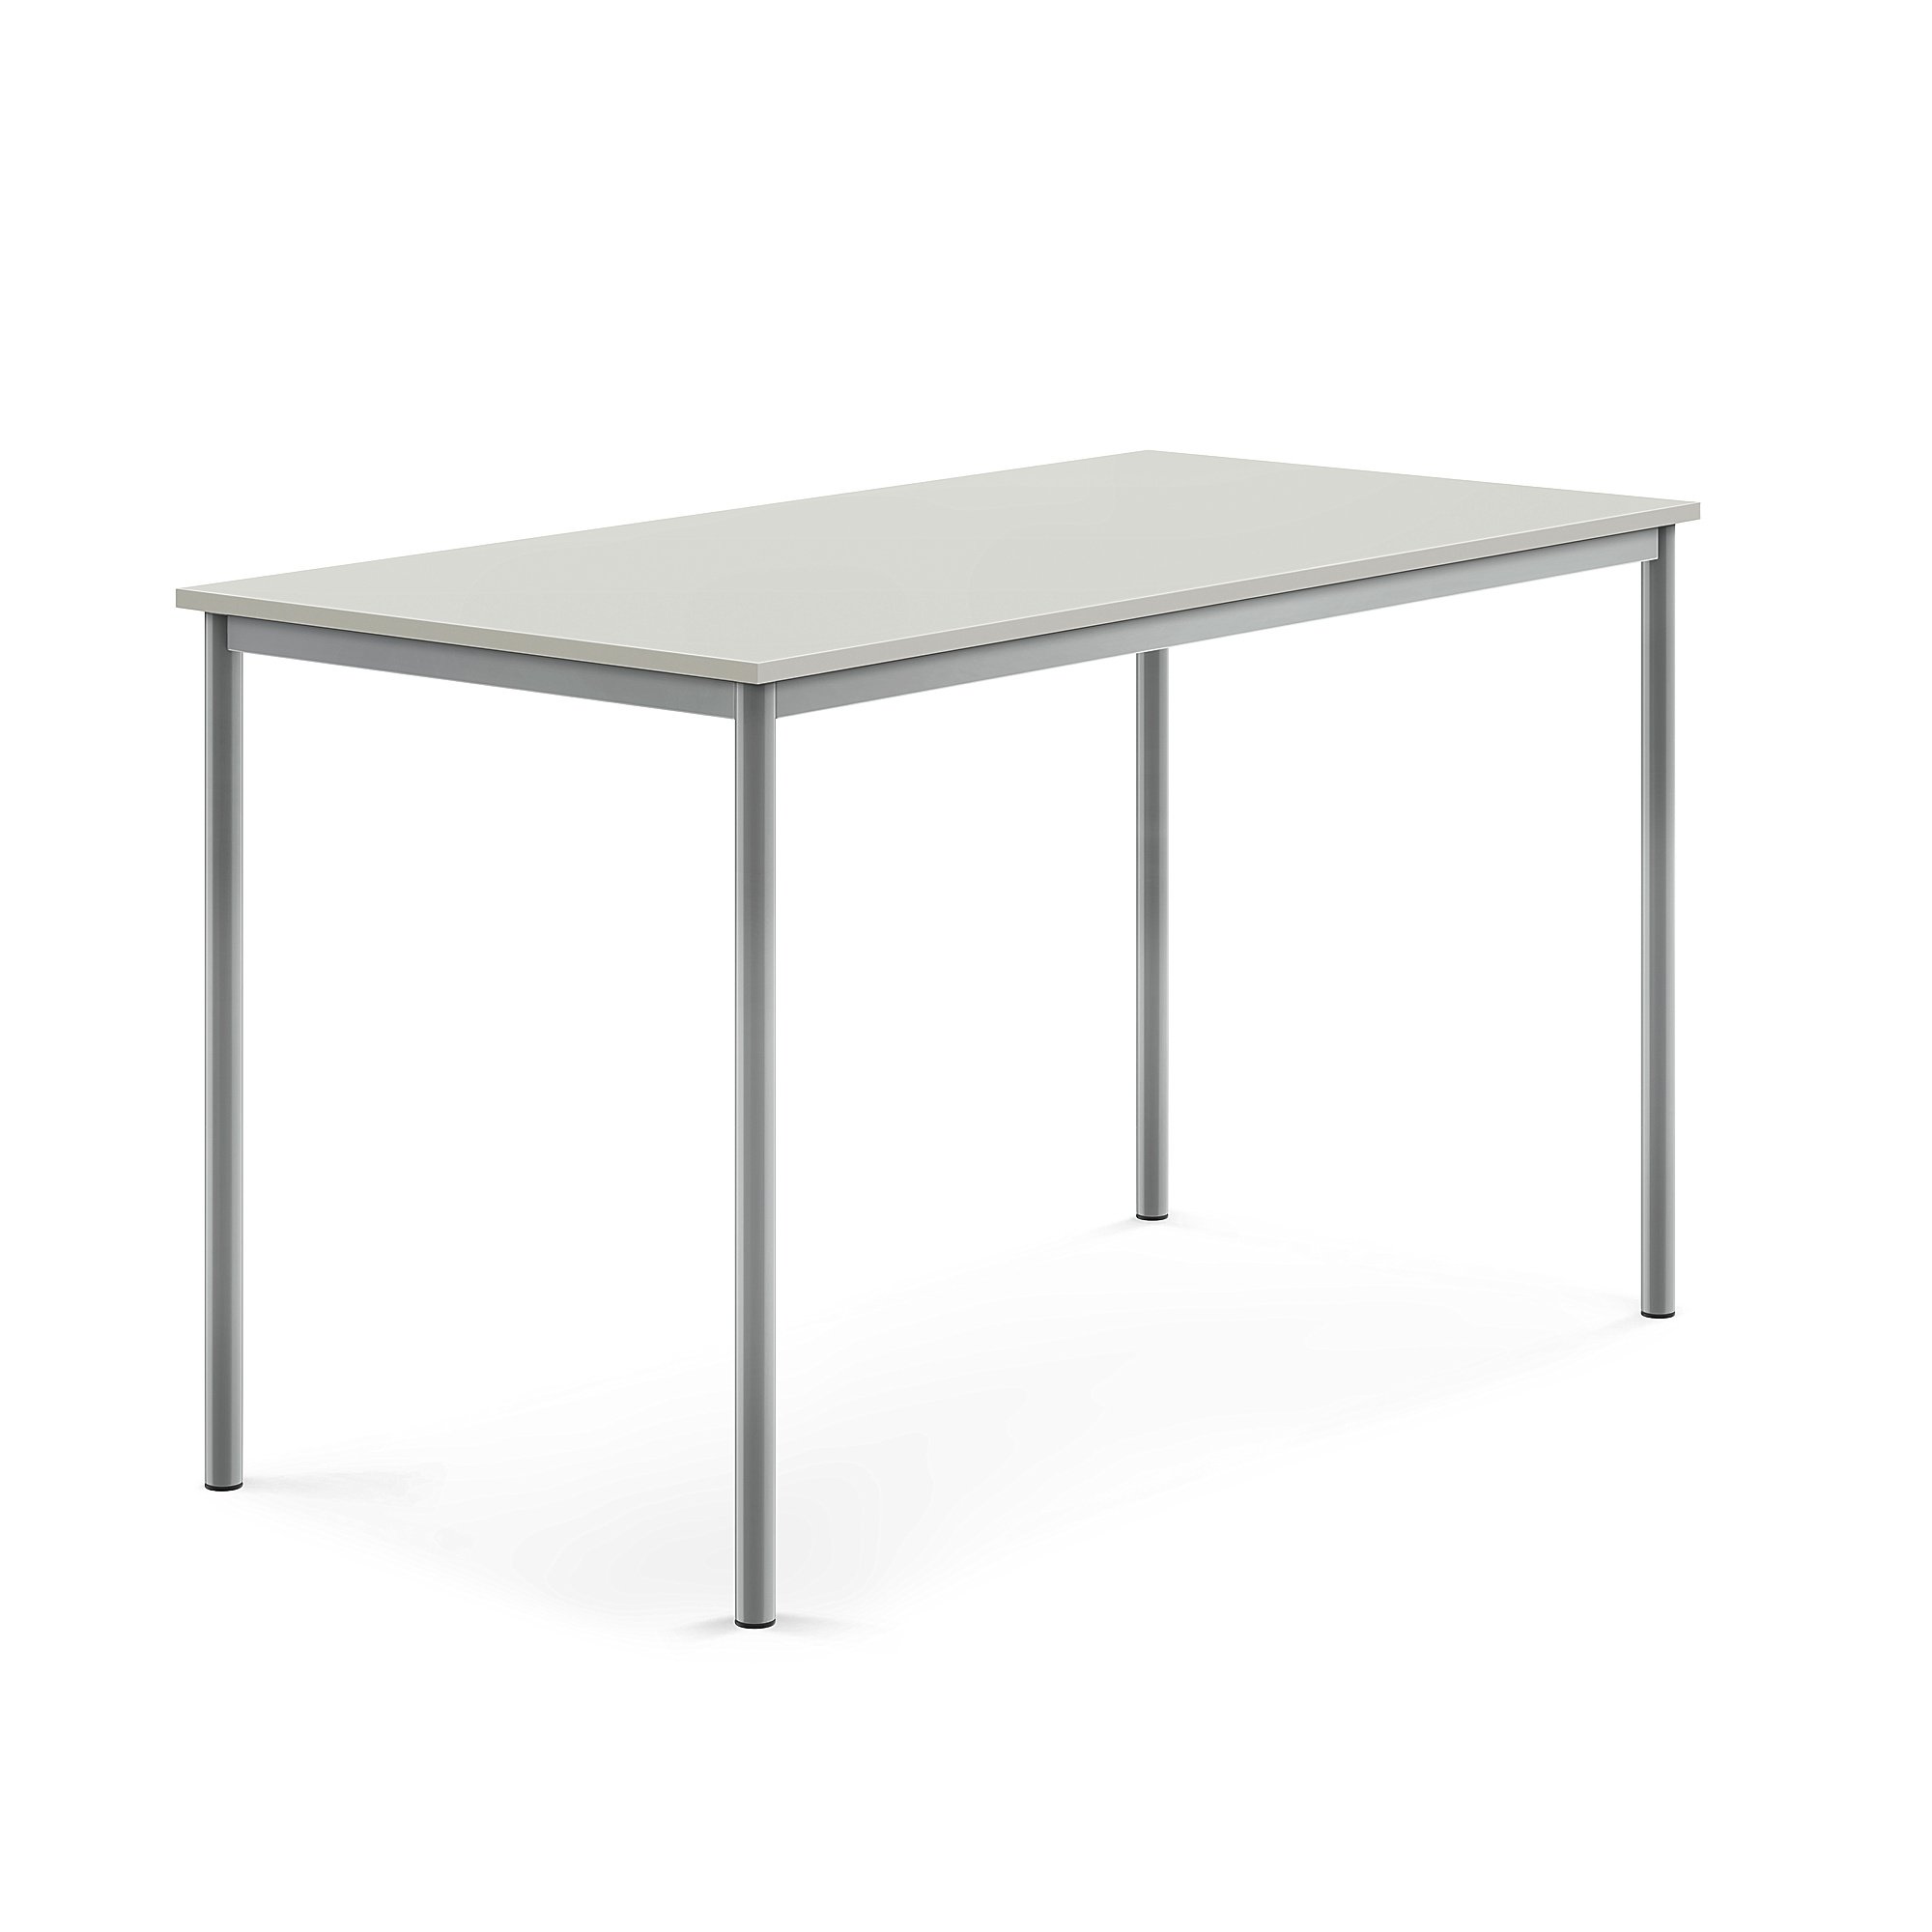 Stôl BORÅS, 1600x800x900 mm, laminát - šedá, strieborná